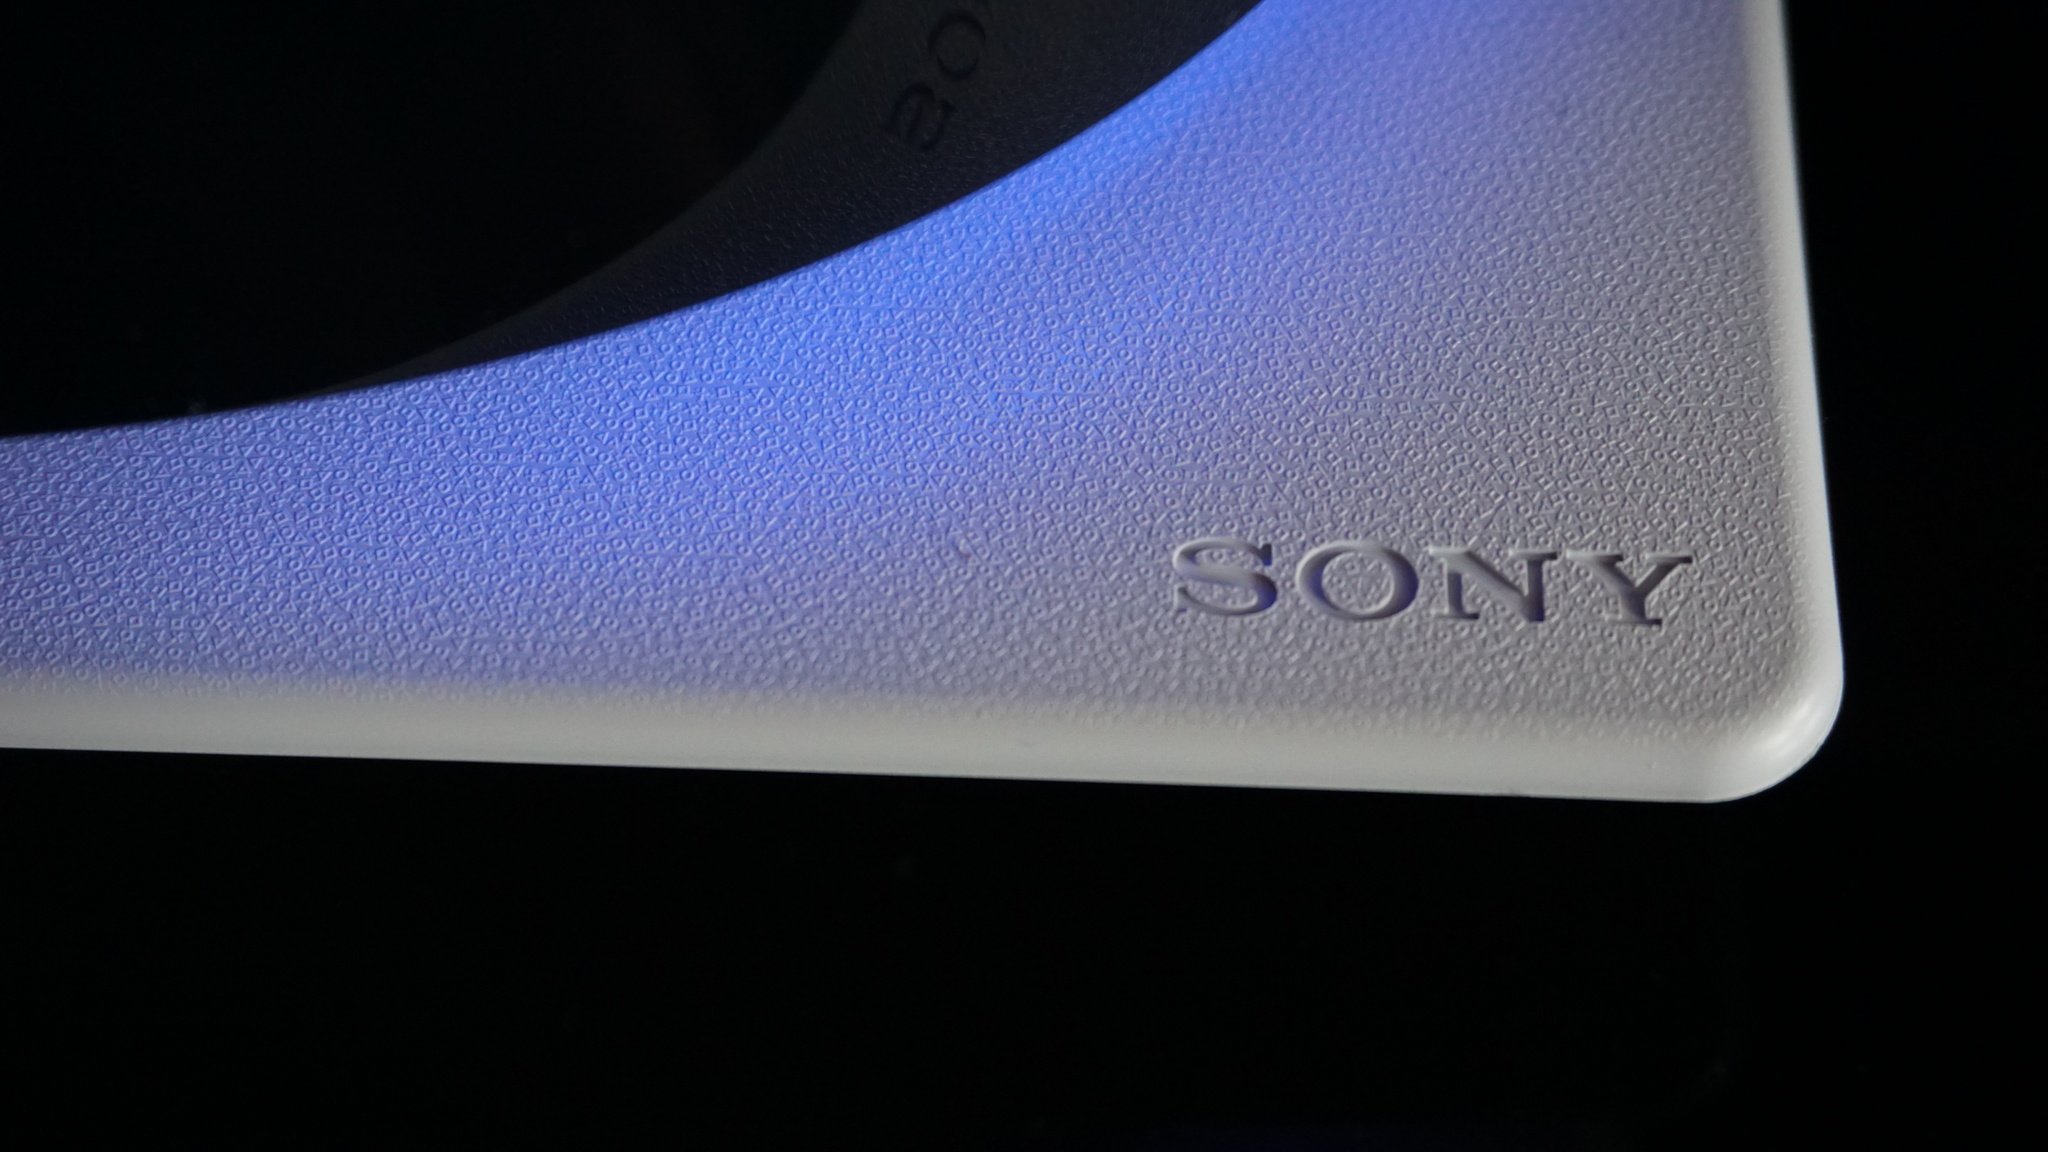 Ps5 Sony Closeup On